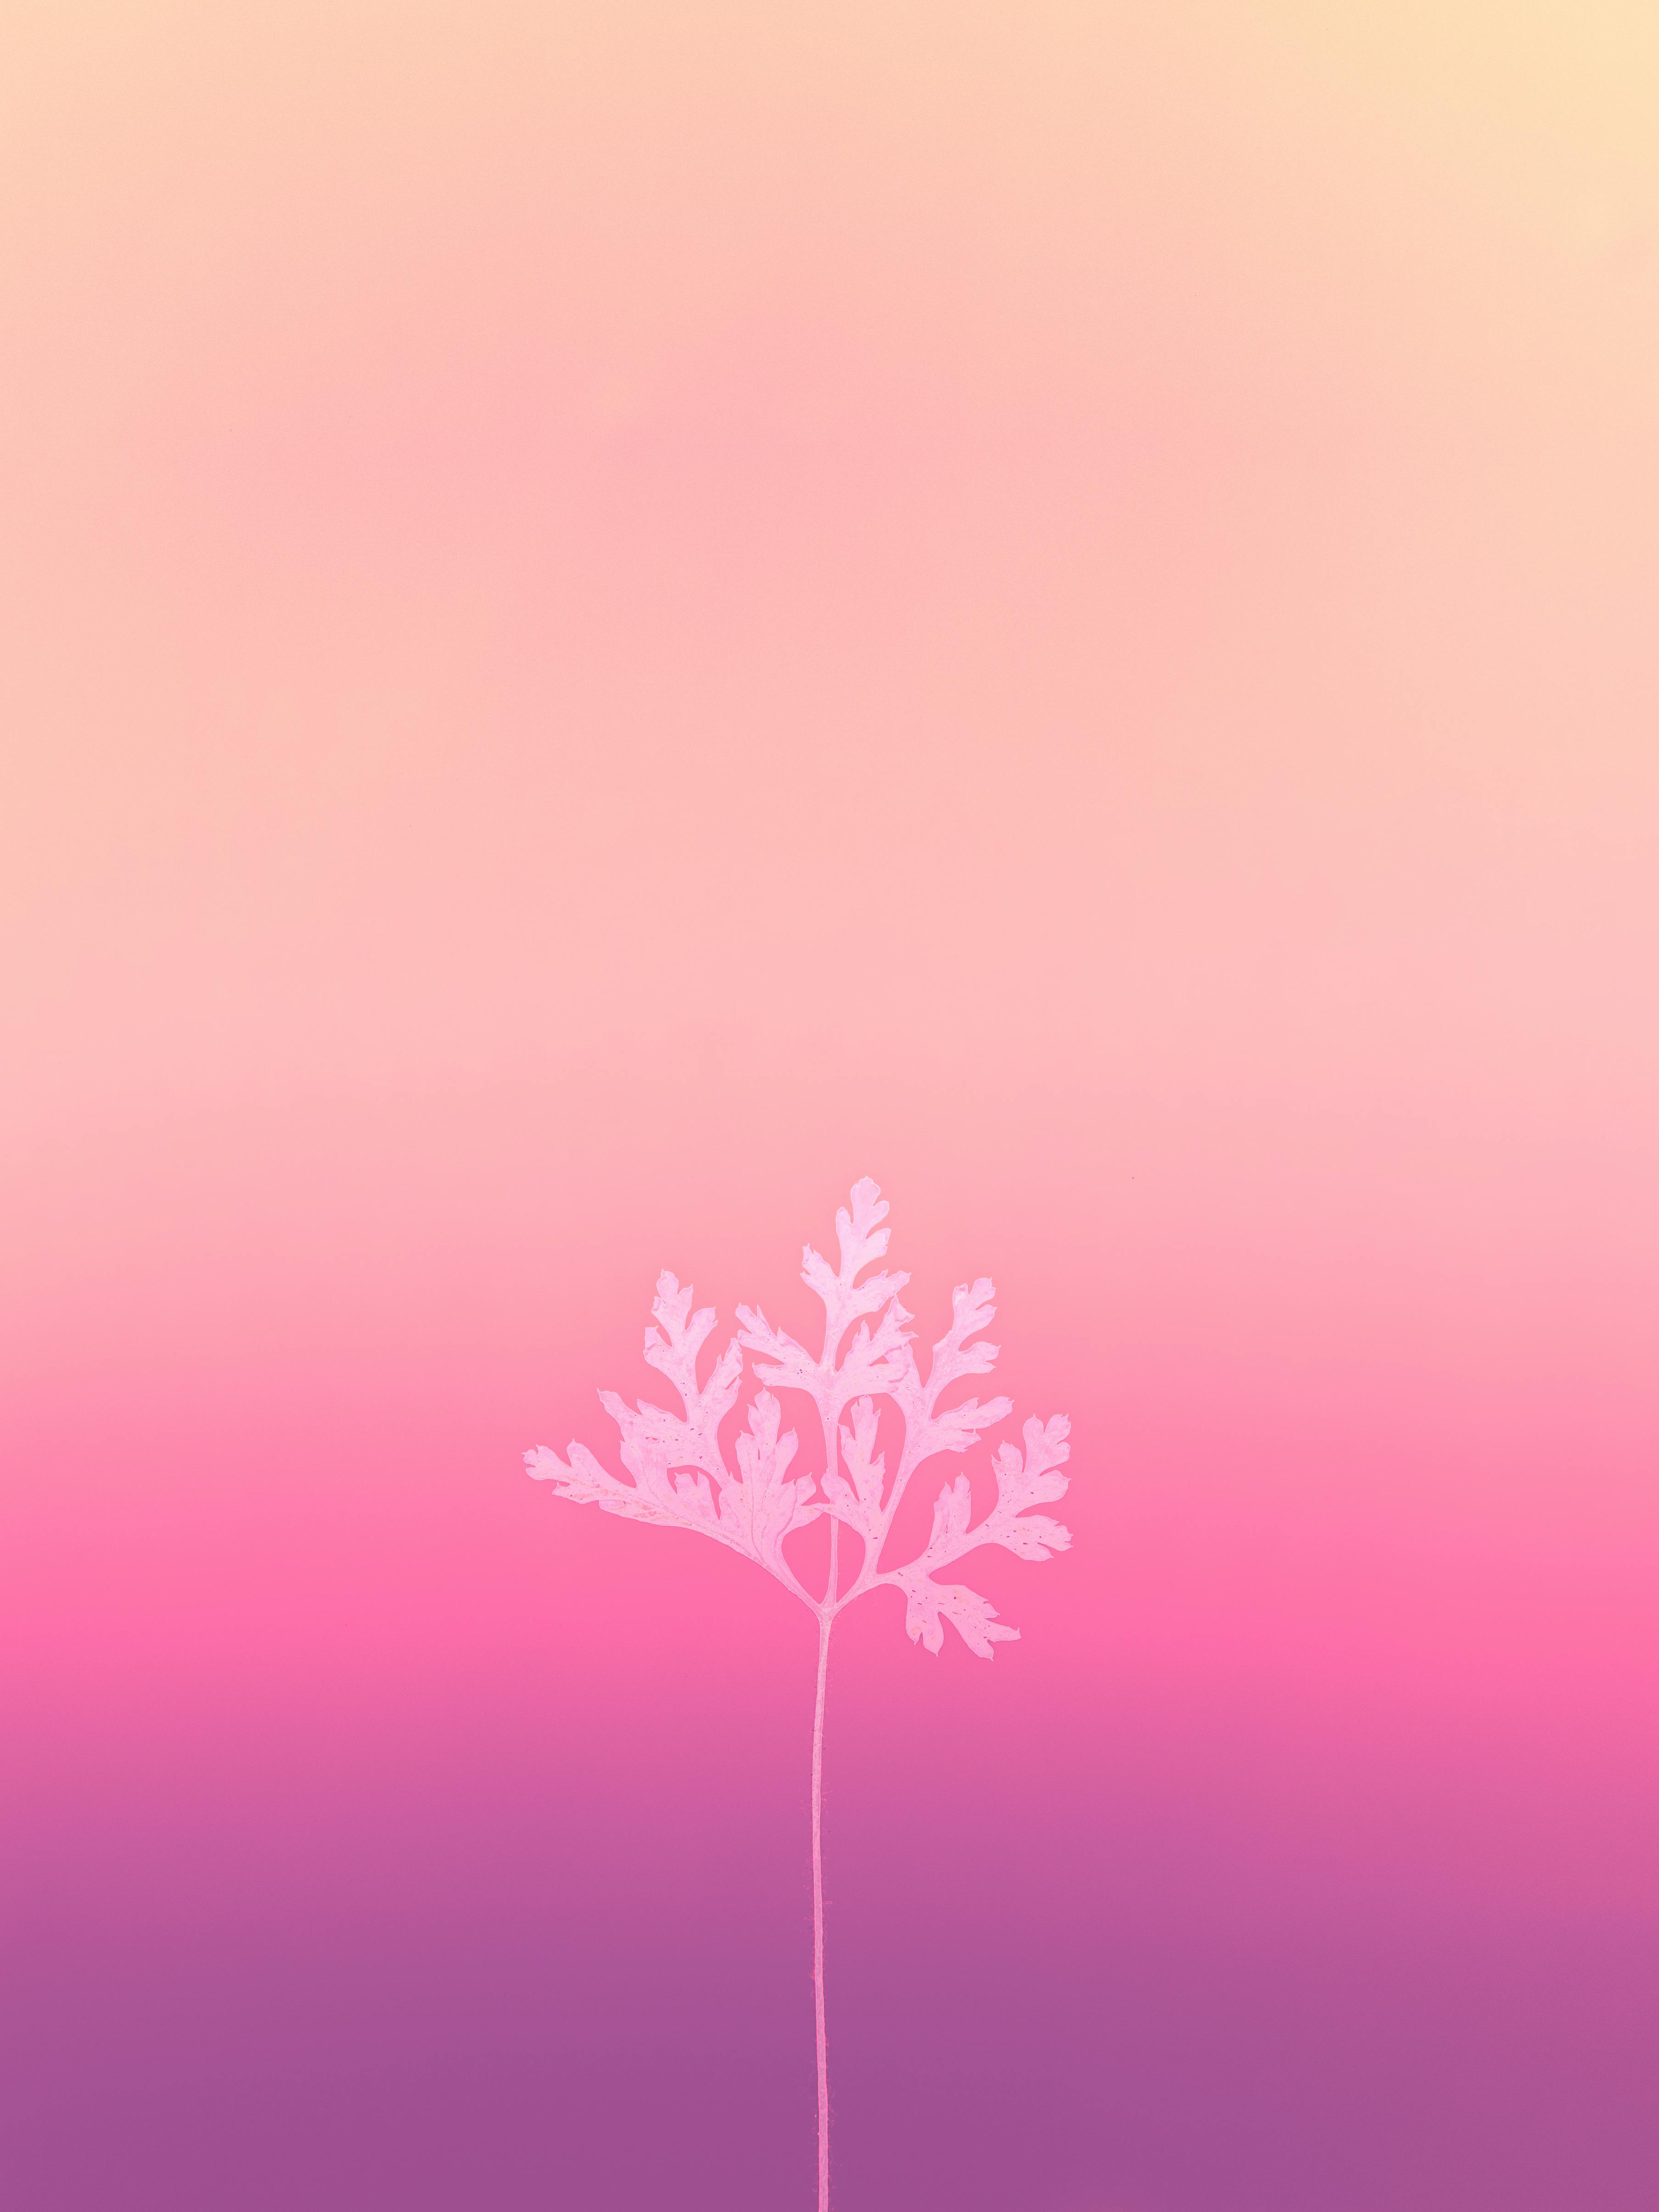 Simple Pink Desktop Wallpapers  Wallpaper Cave